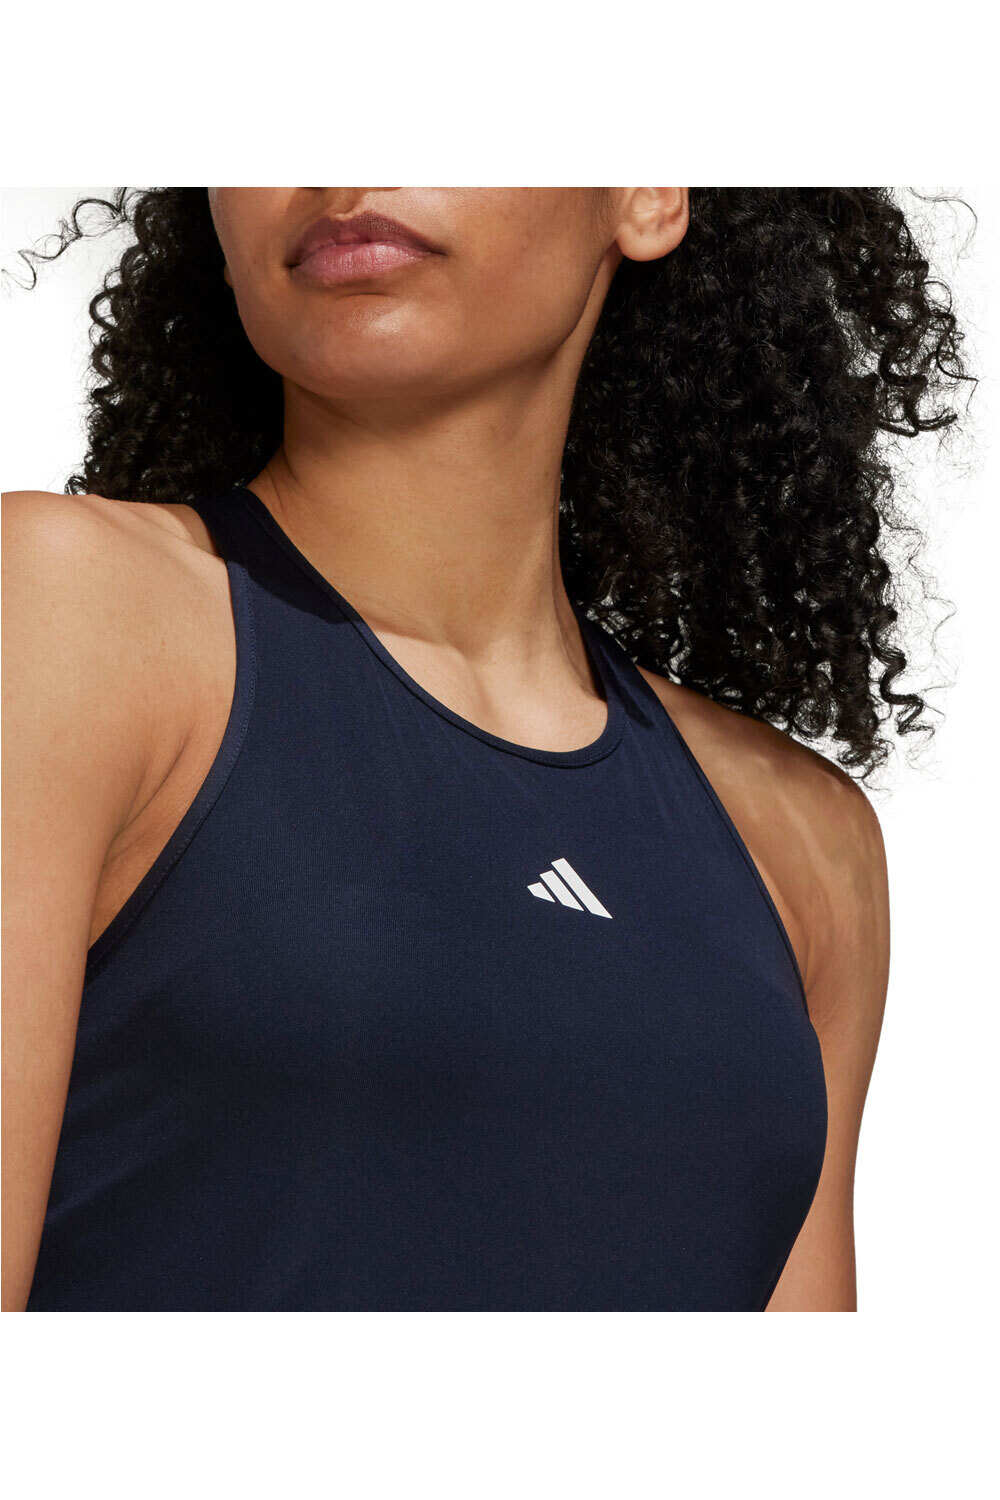 adidas camiseta tirantes fitness mujer Techfit Racerback Training vista detalle